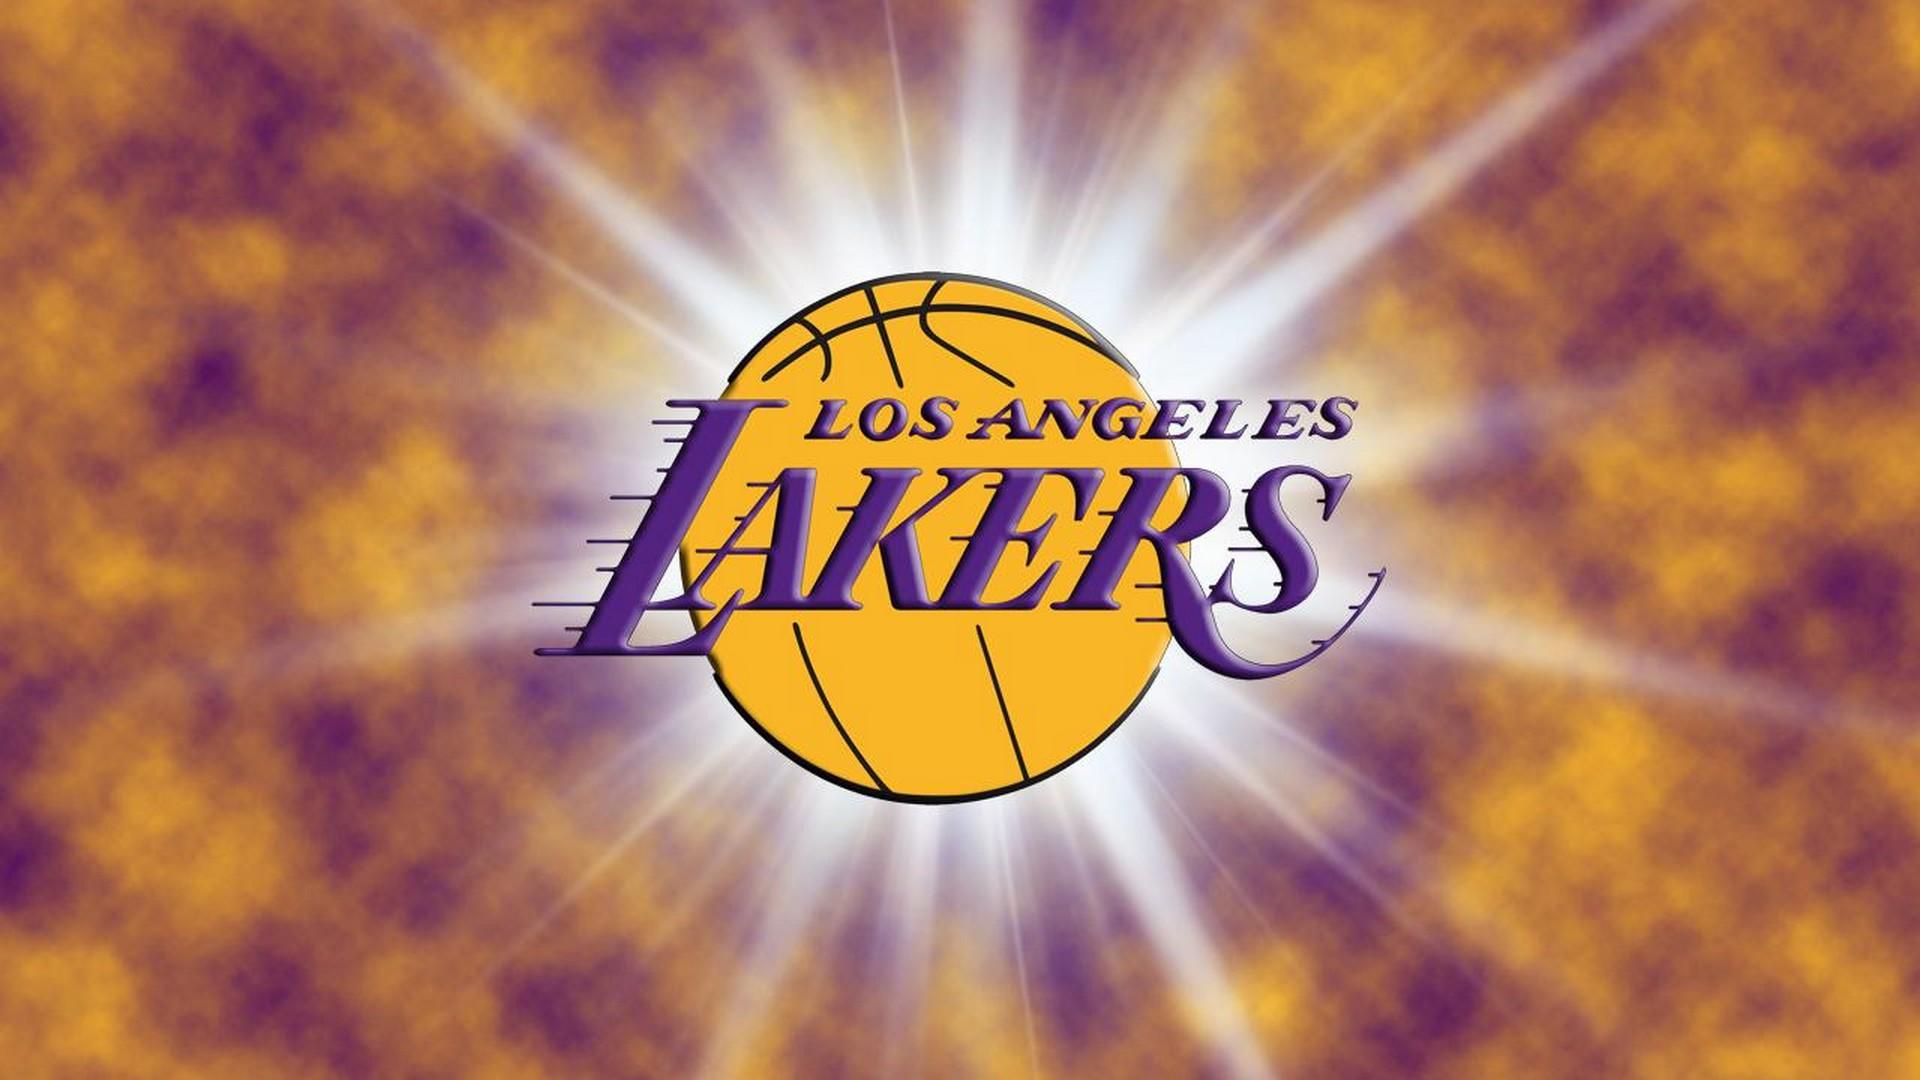 Windows Wallpaper LA Lakers Basketball Wallpaper